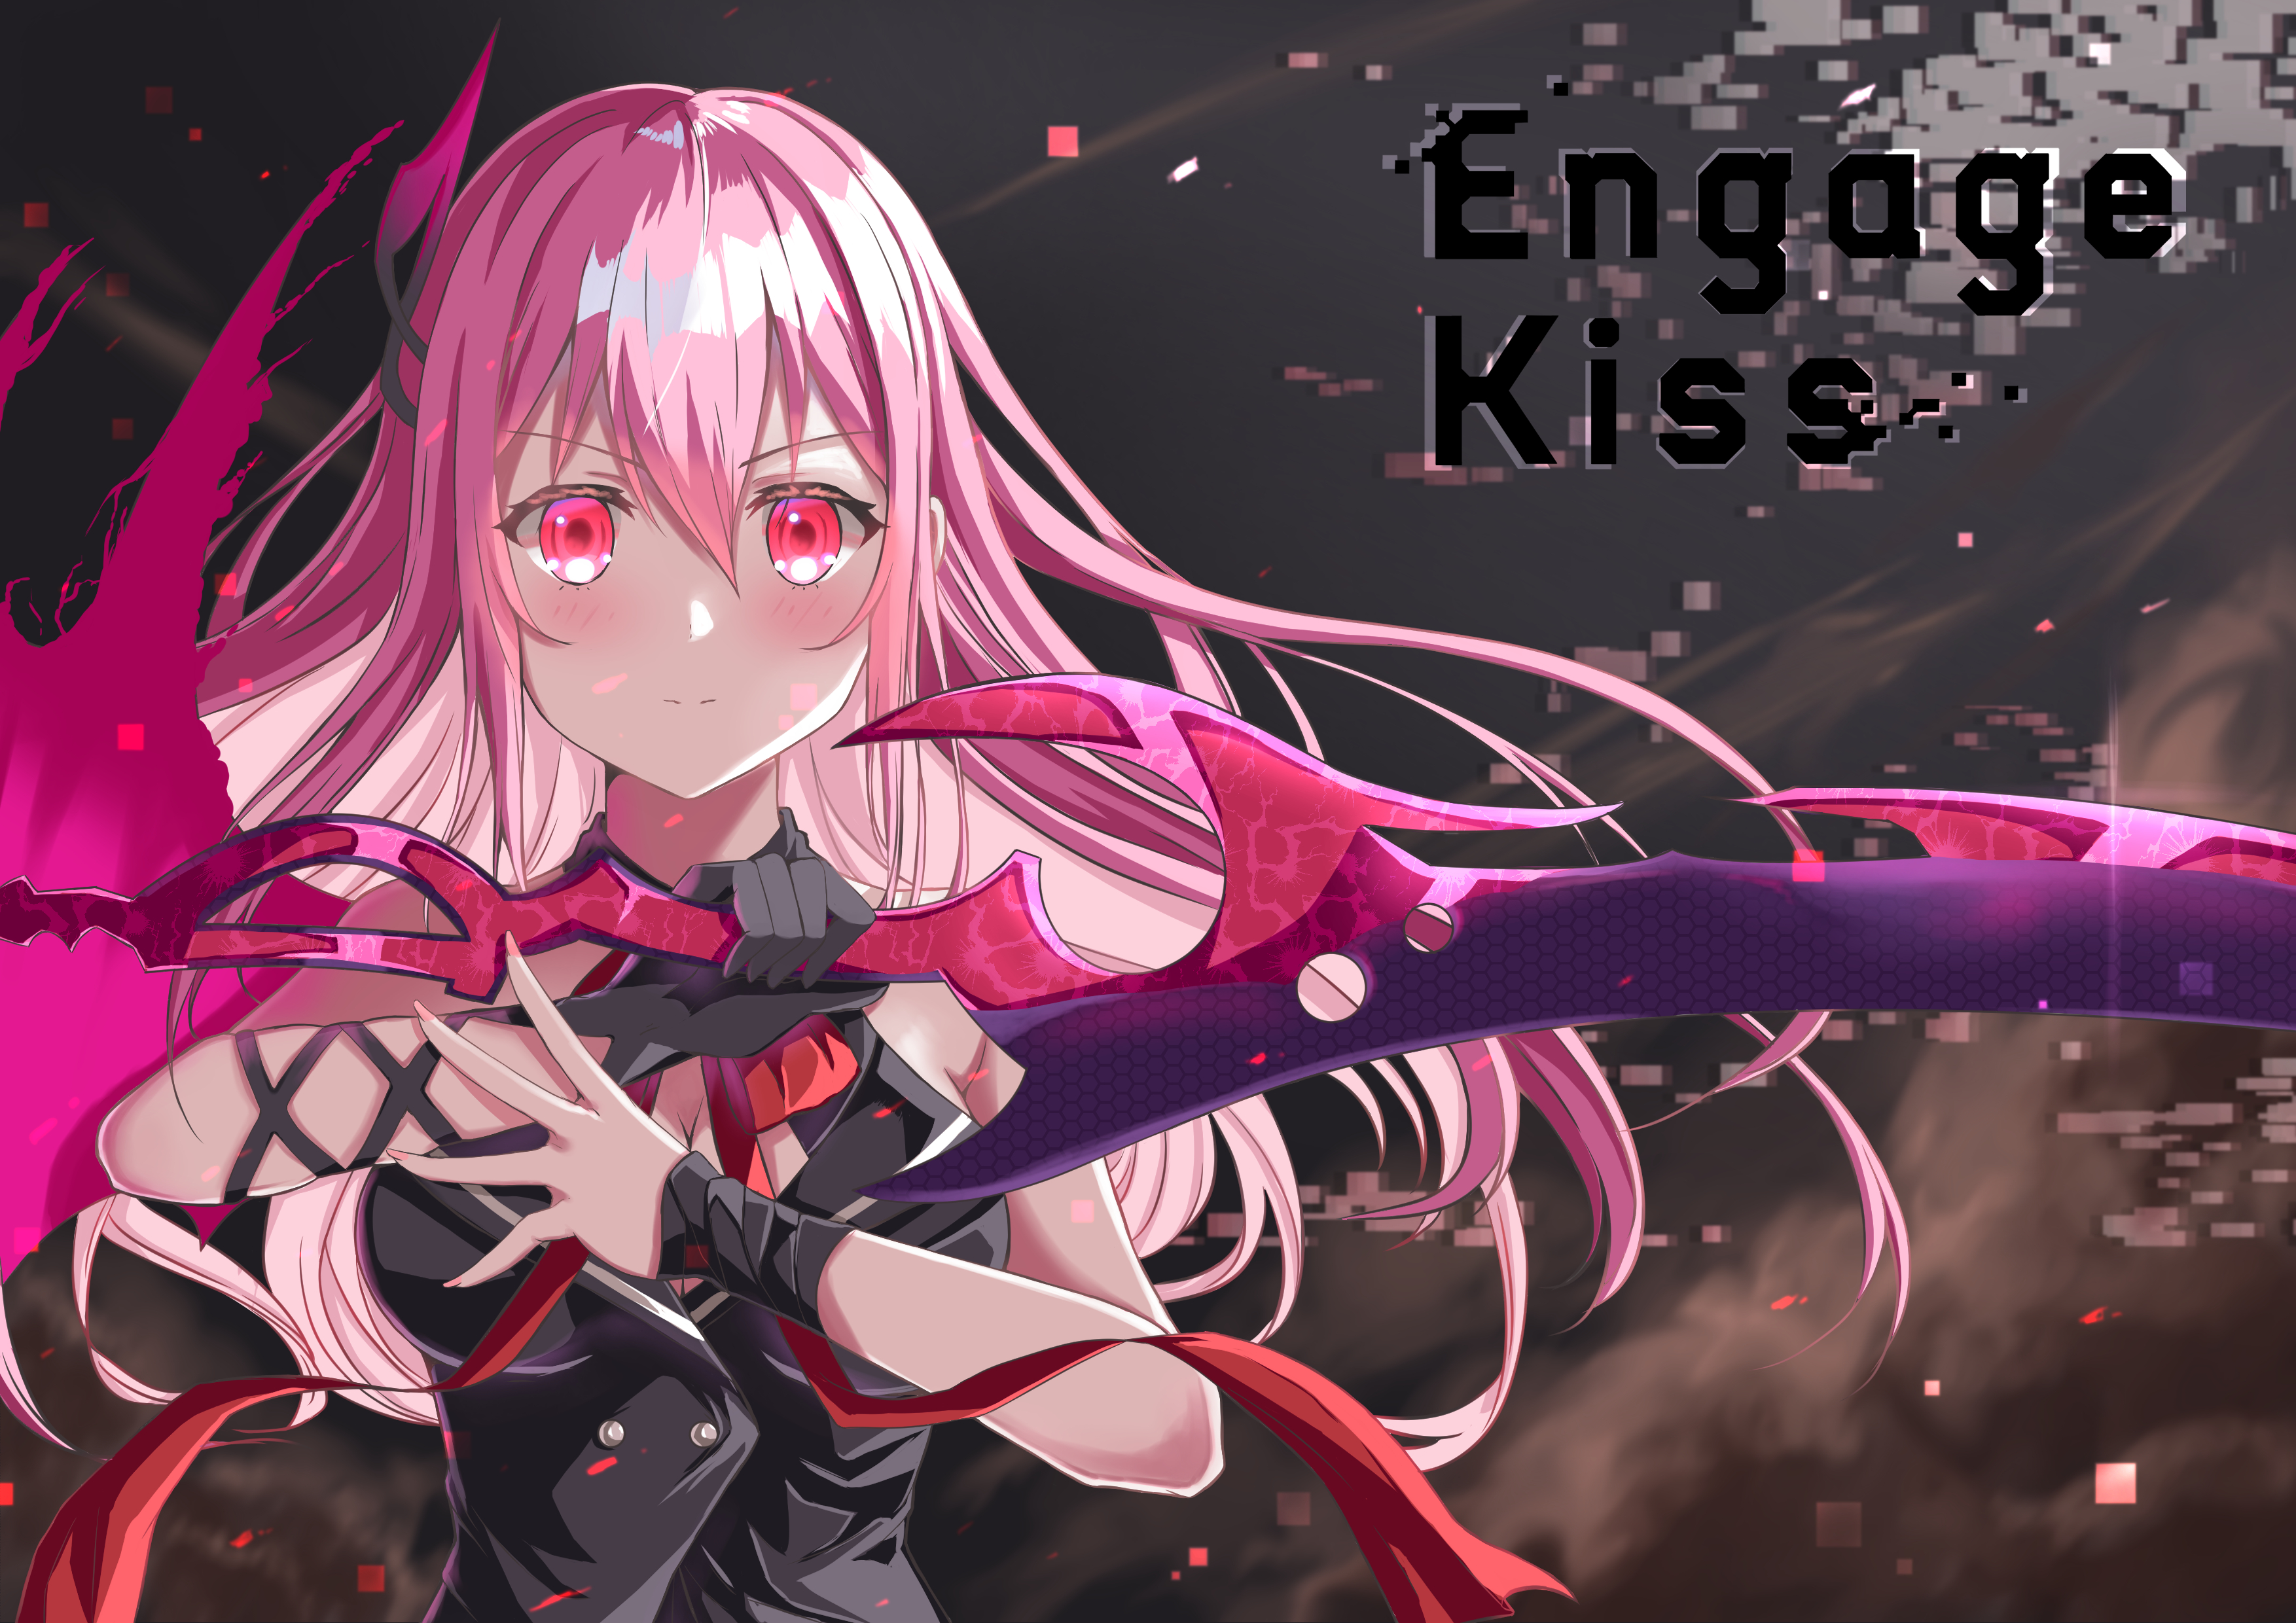 Download Kiss Anime App Free on PC (Emulator) - LDPlayer